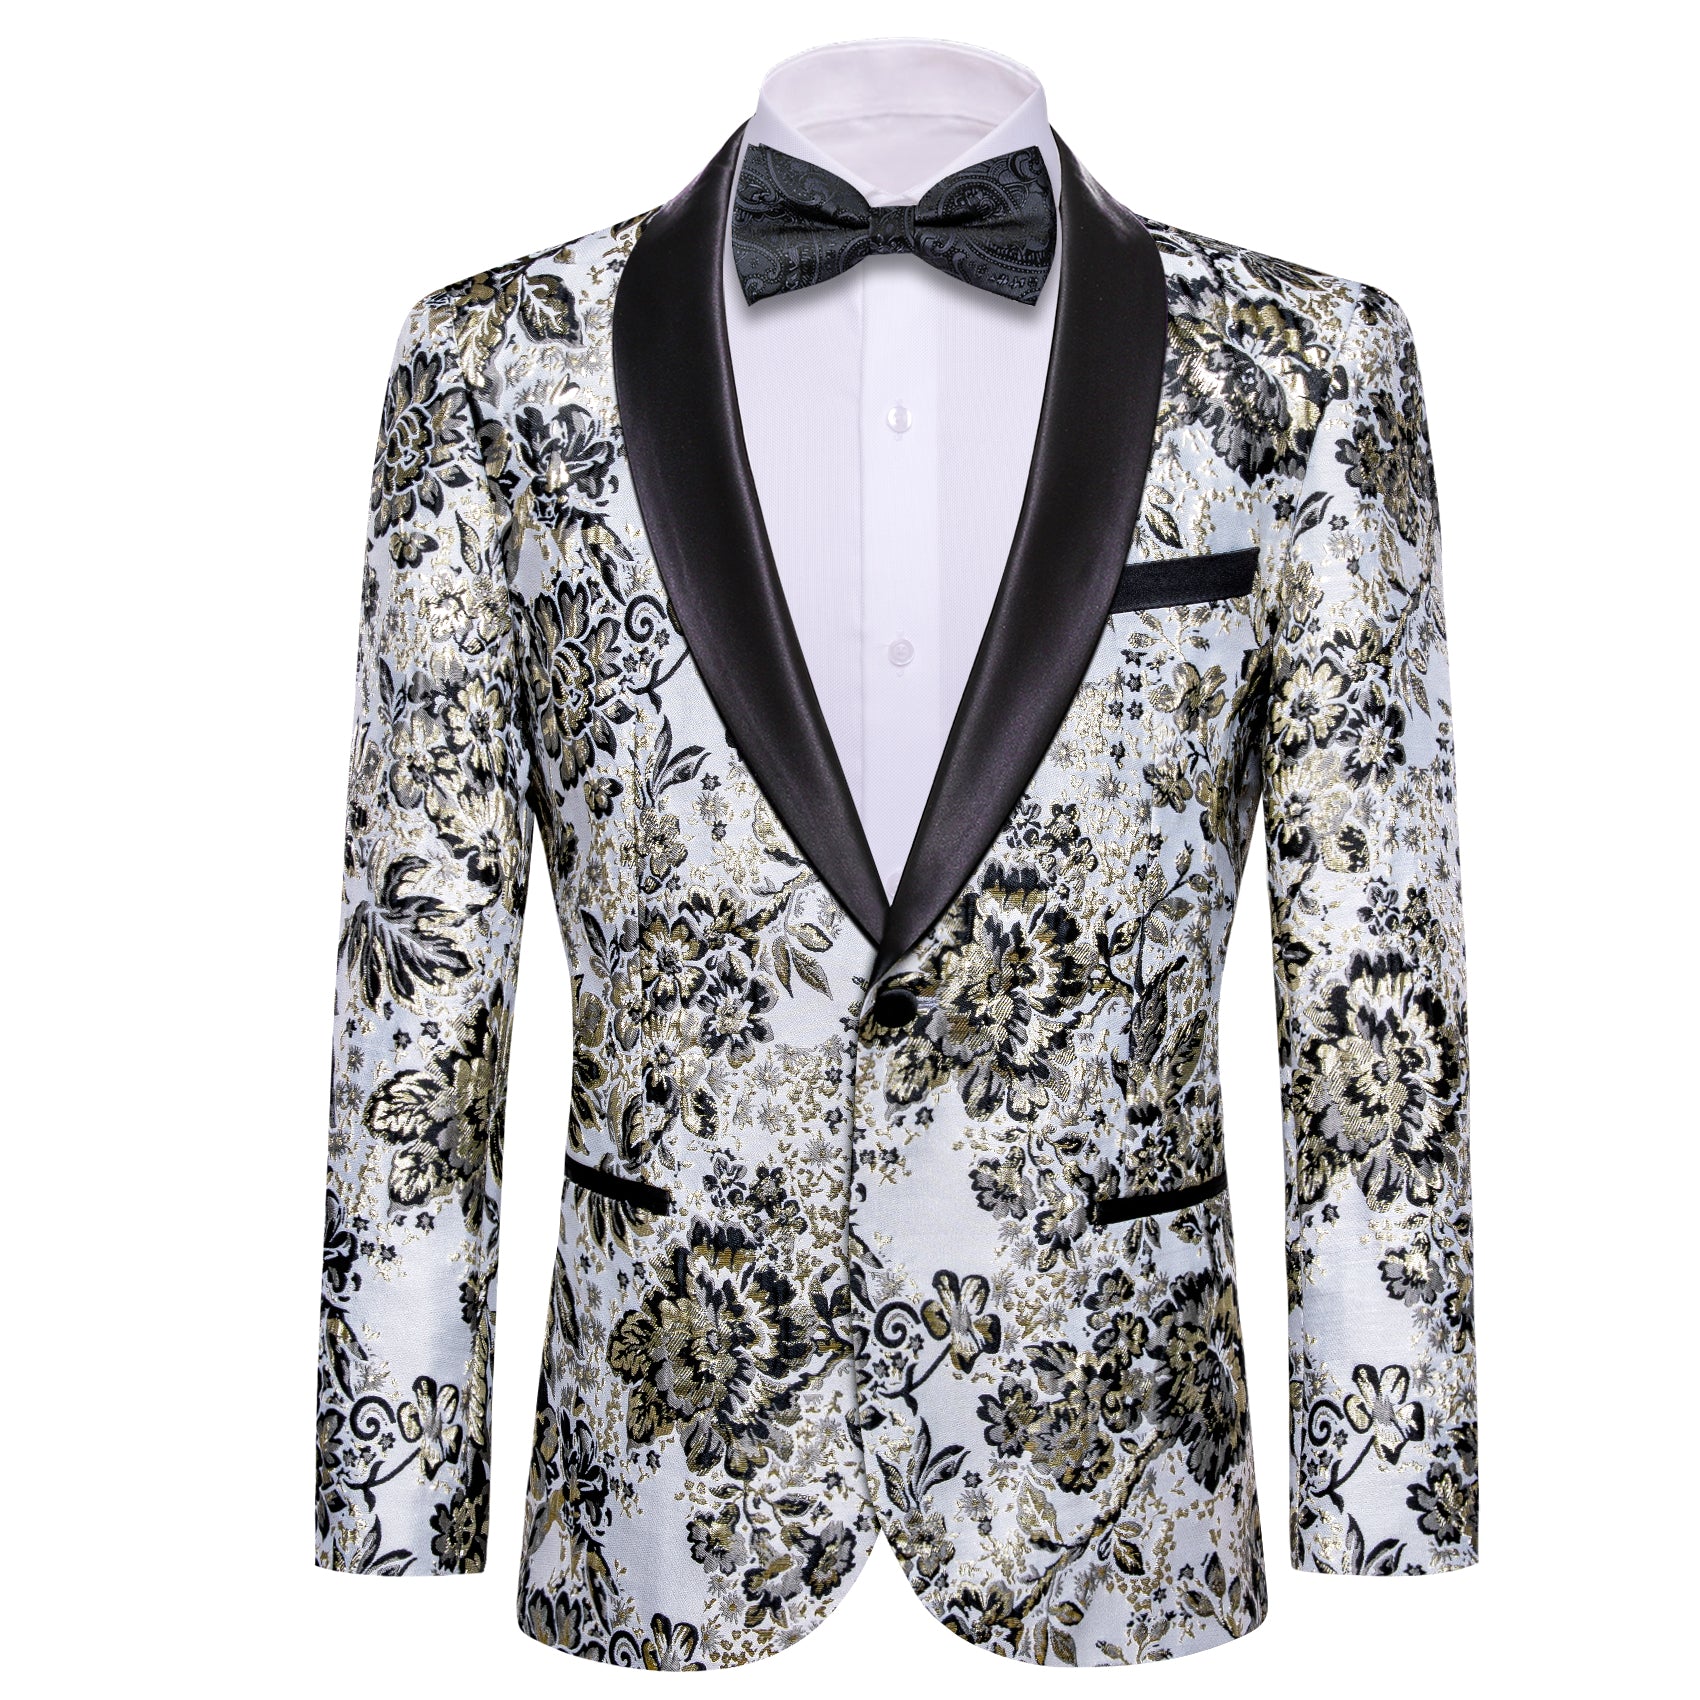 Men's Dress Party White Green Floral Suit Jacket Slim One Button Stylish Blazer